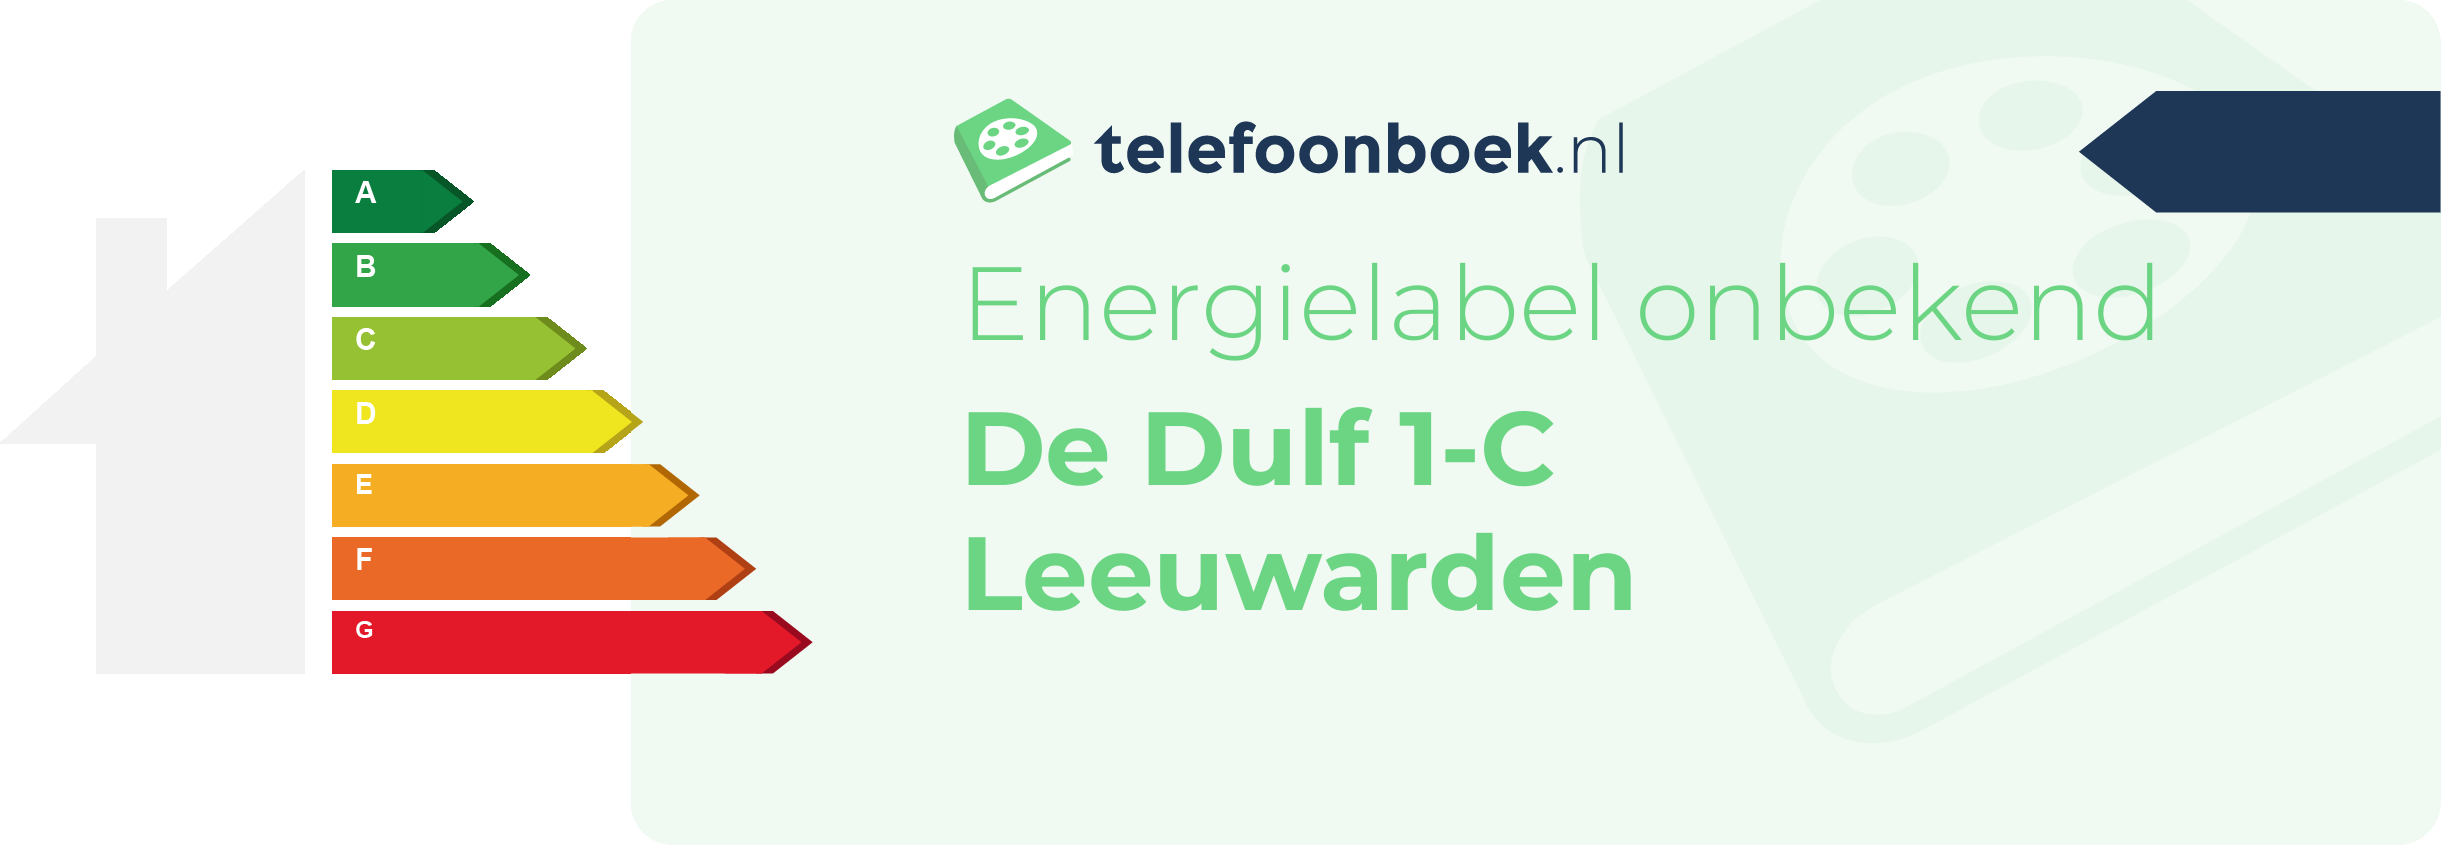 Energielabel De Dulf 1-C Leeuwarden